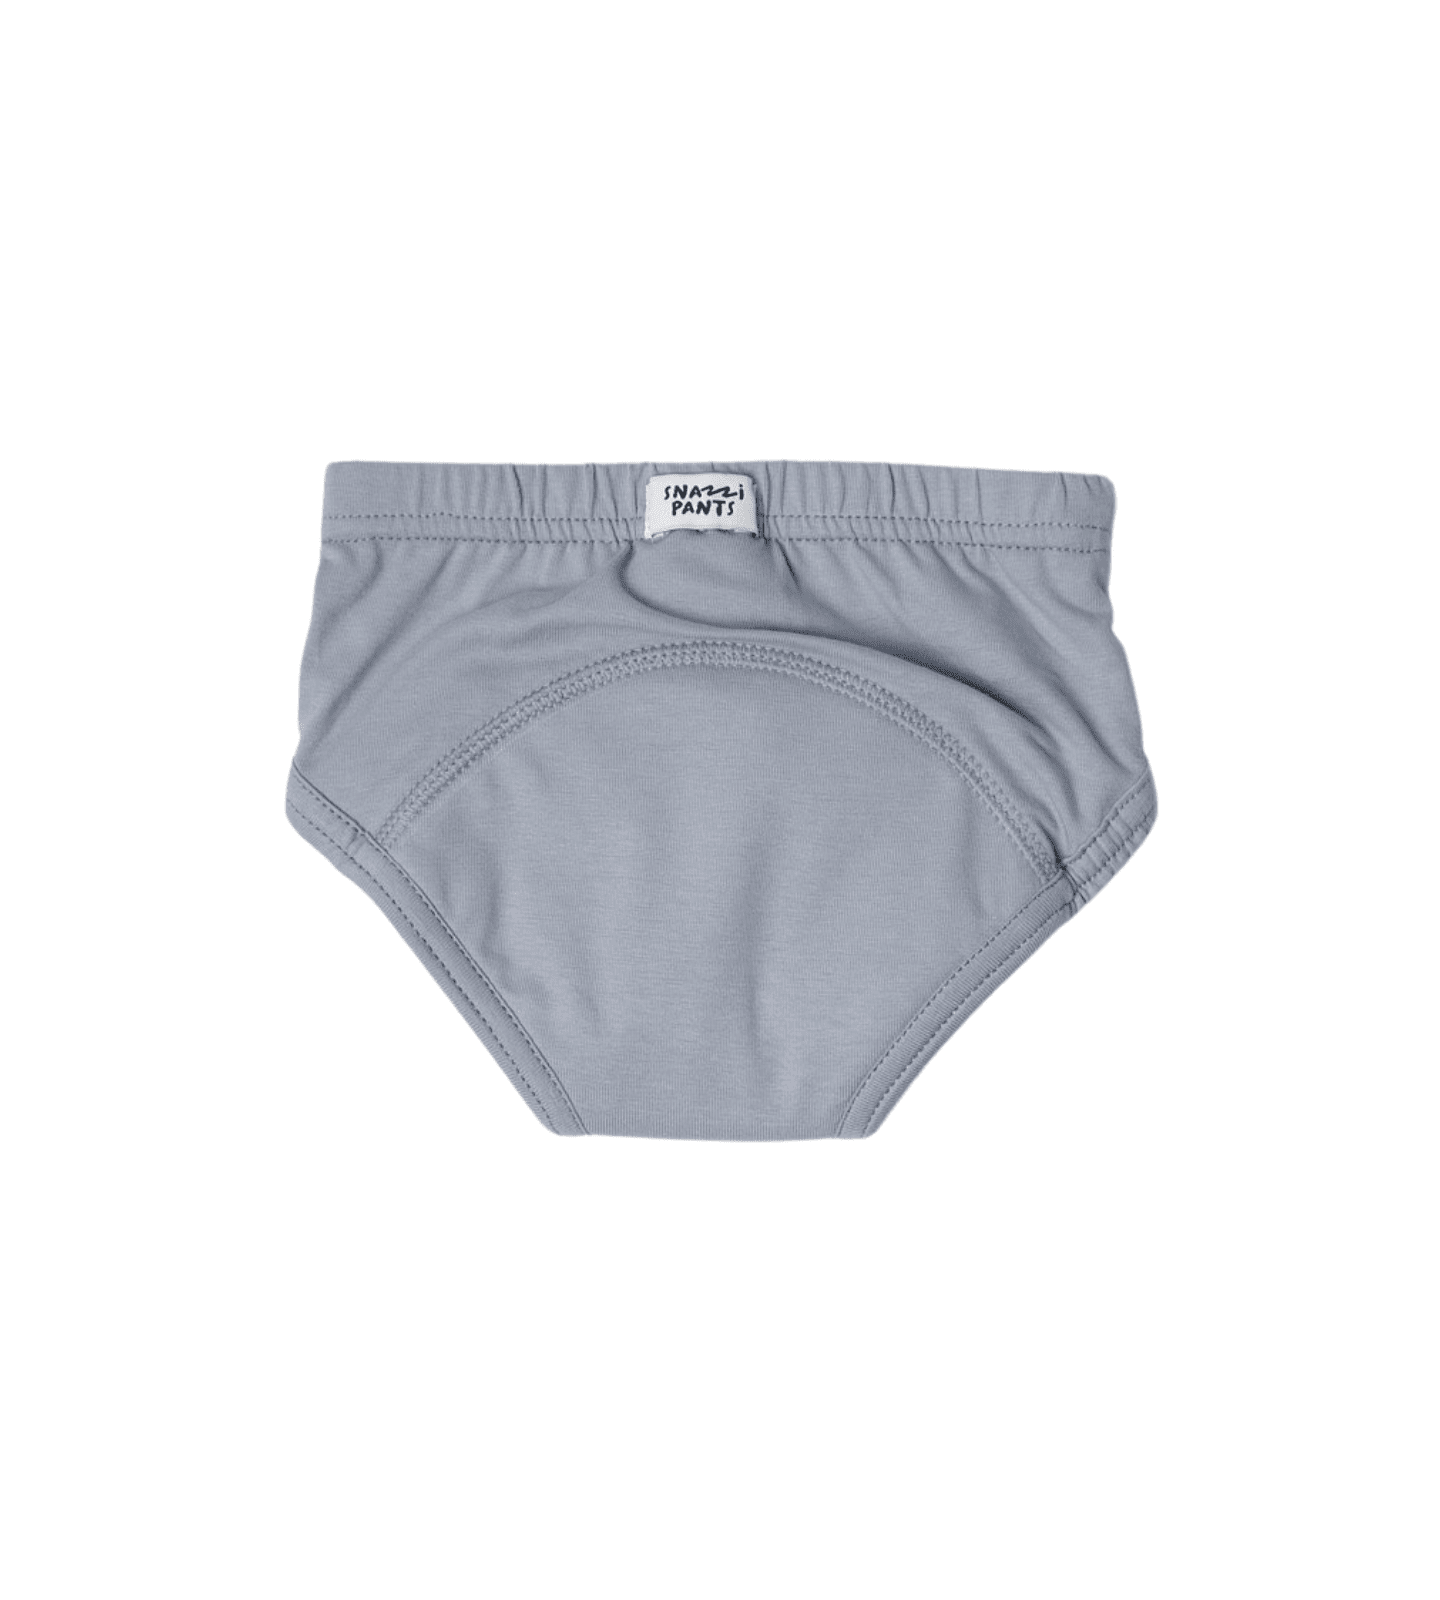 Underoos Size Medium 8 Boys Underwear Shirt Set, Multi